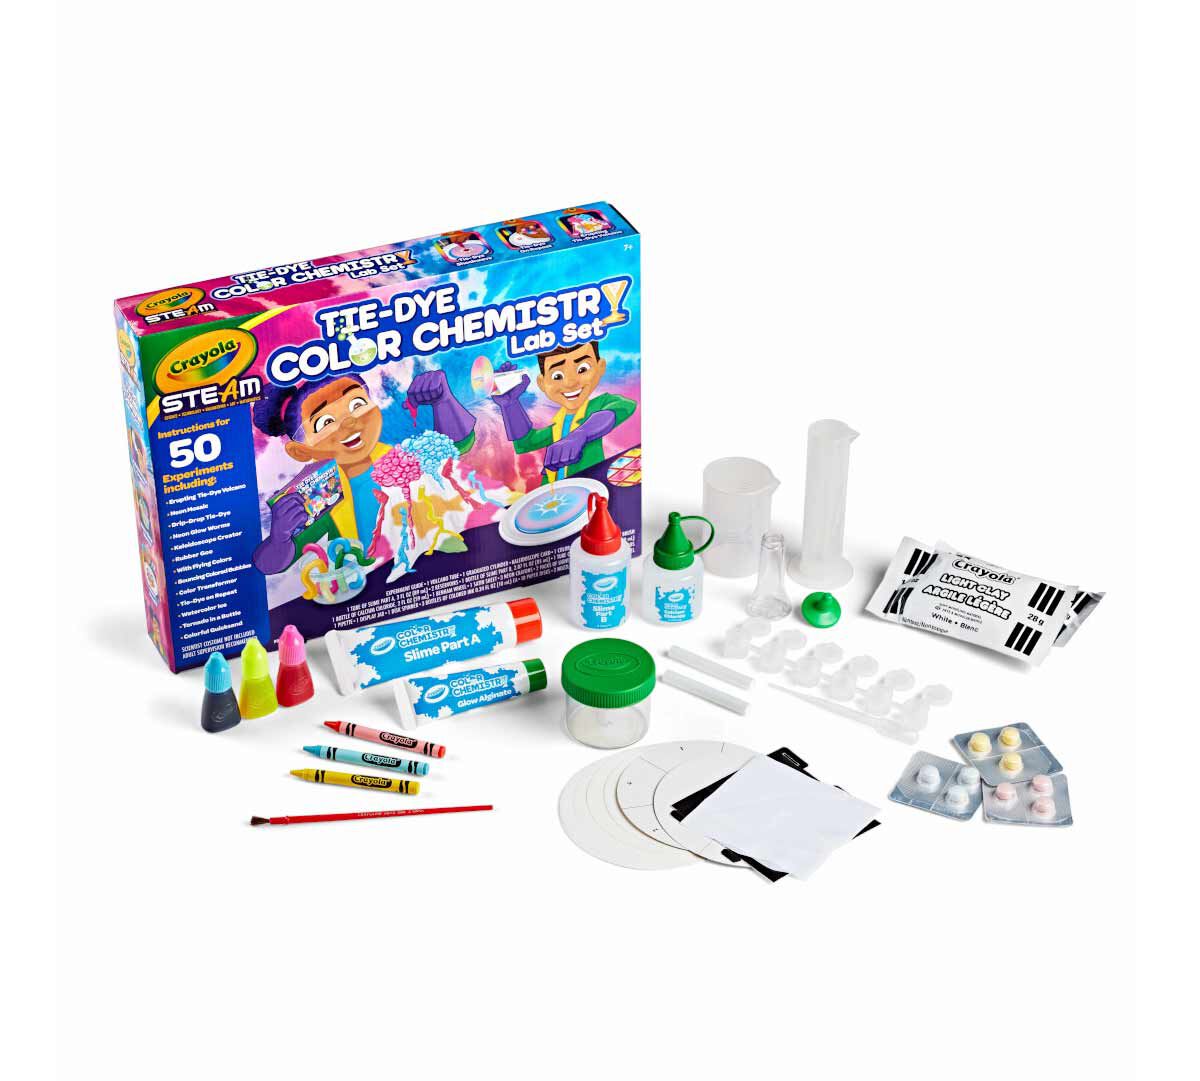 Crayola Tie Dye Color Chemistry Set for Kids | Crayola.com | Crayola